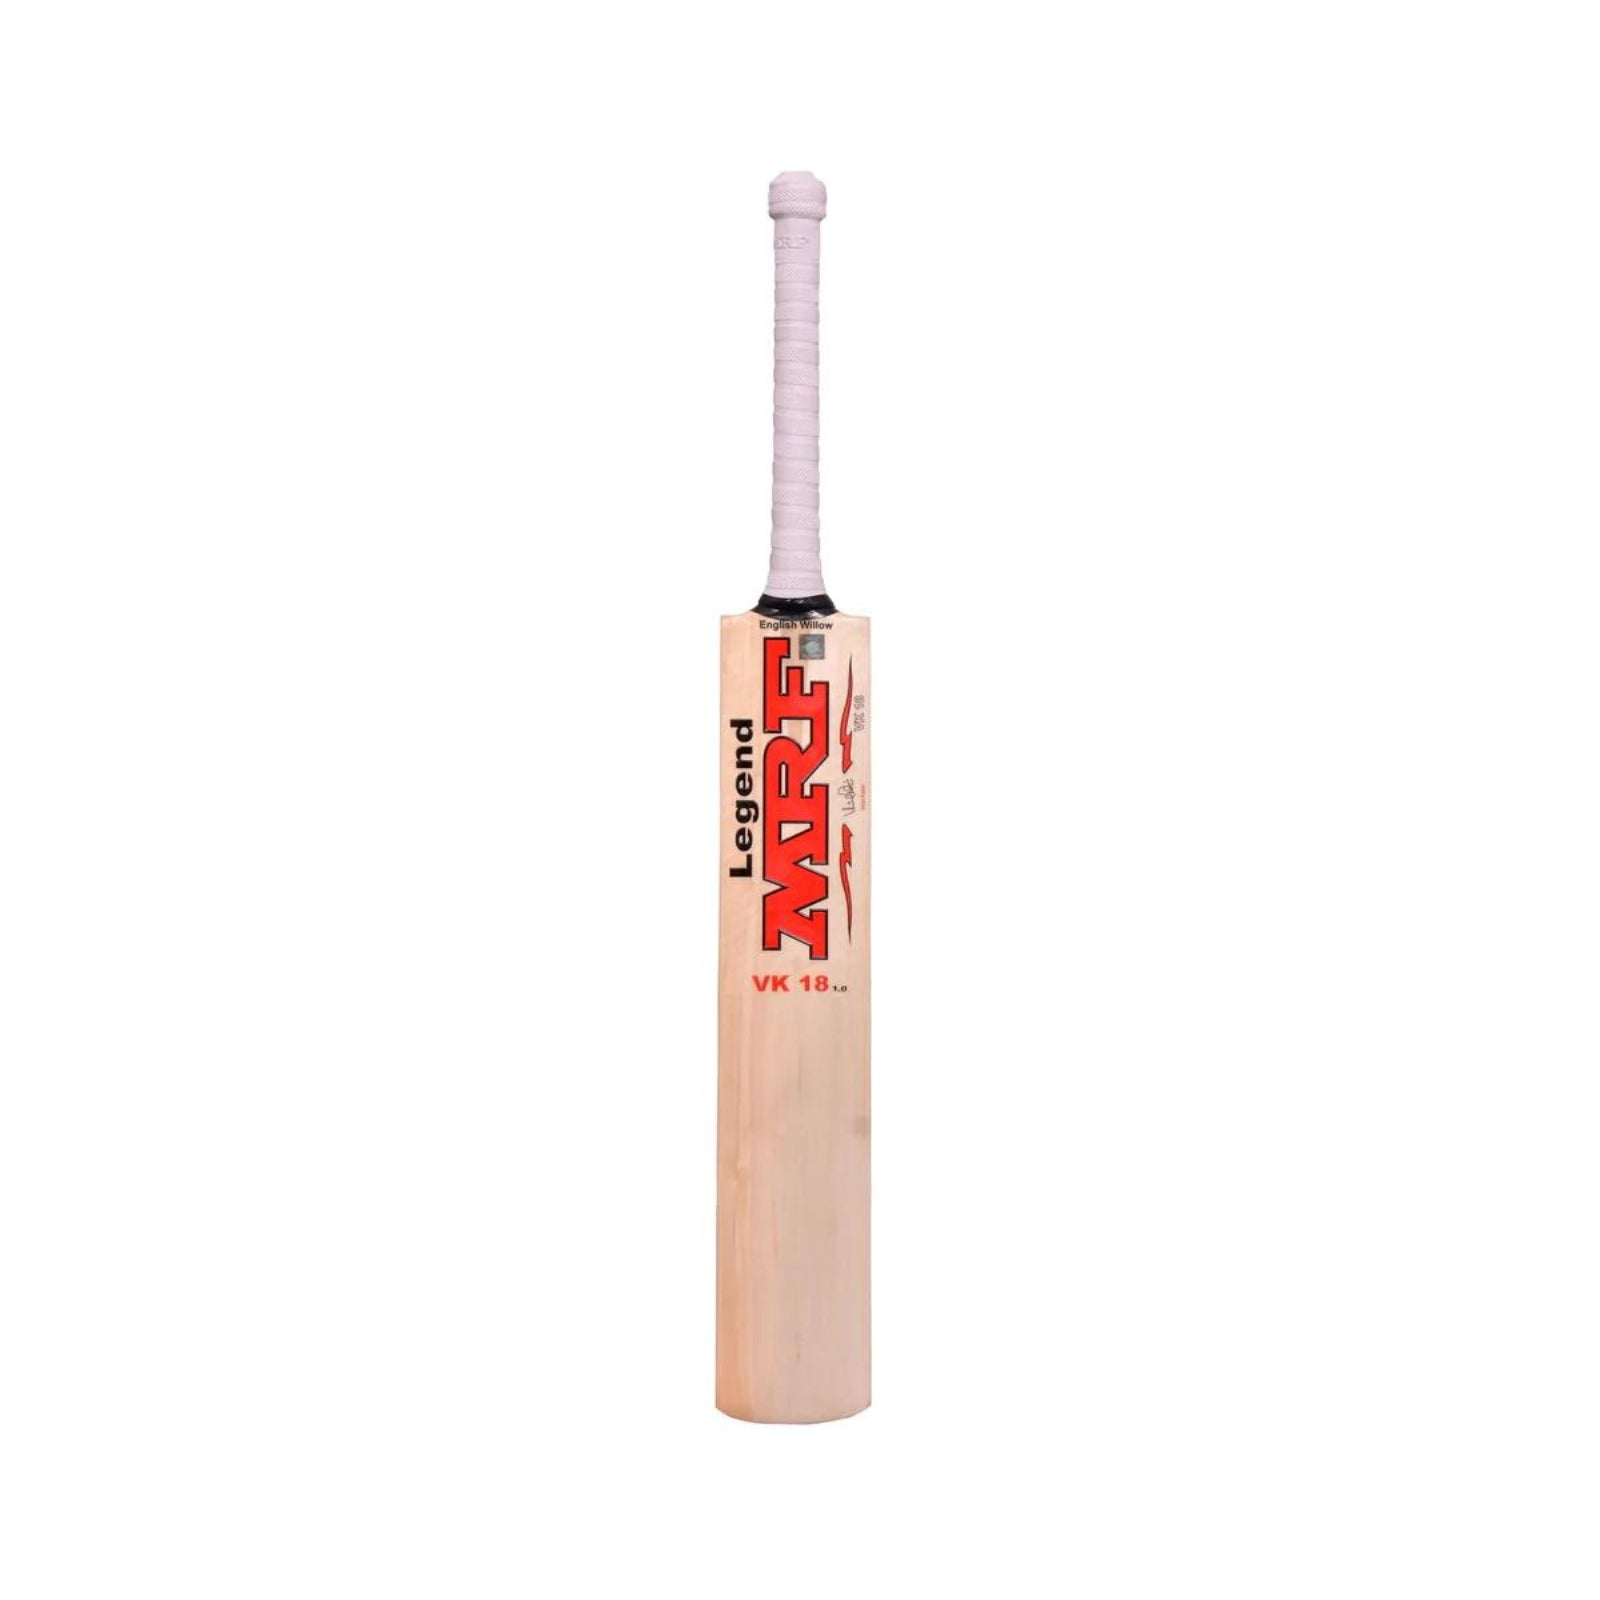 MRF Legend VK18 1.0 Cricket Bat - Size 5